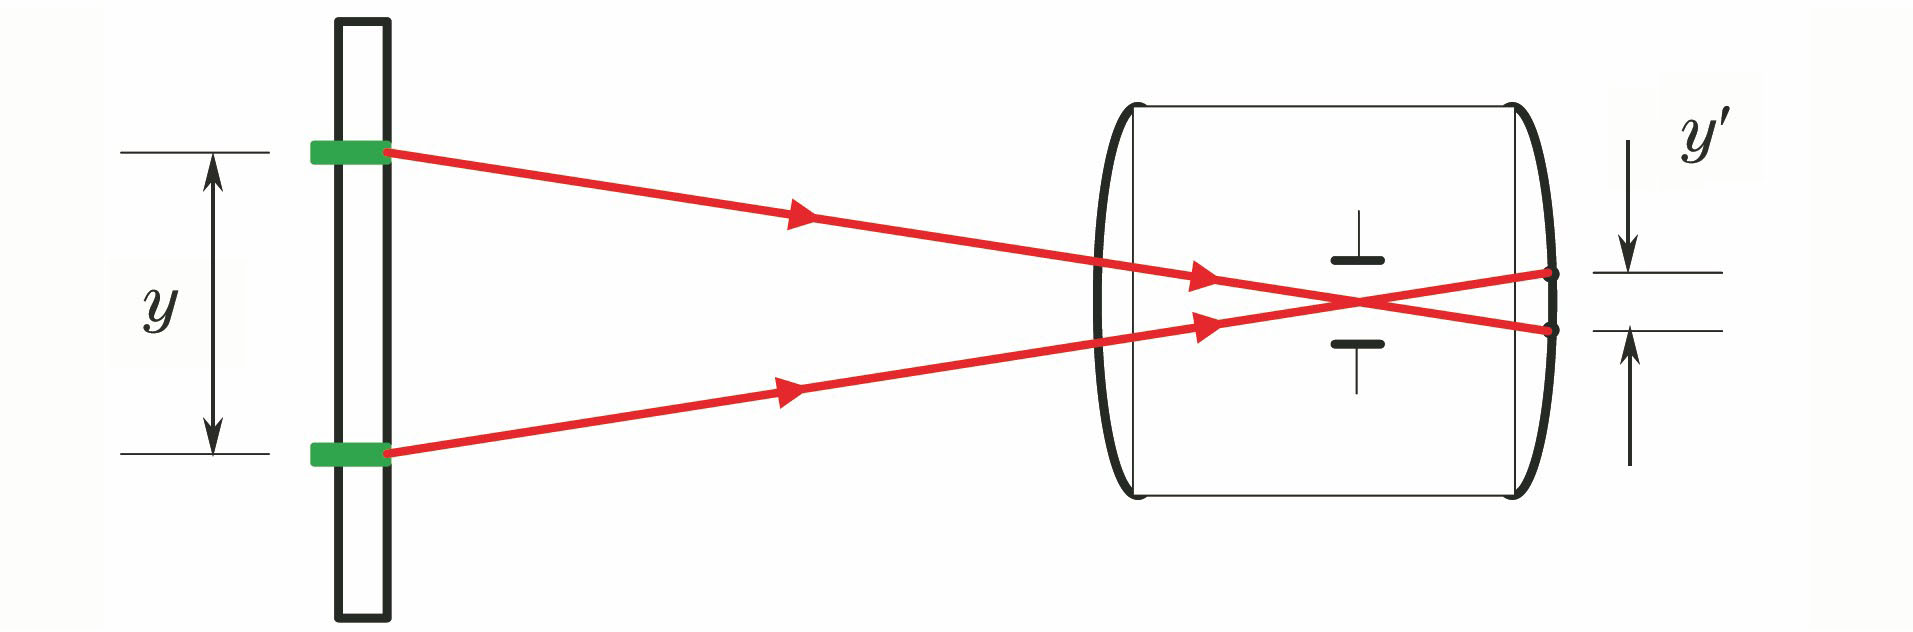 Schematic of magnification measurement